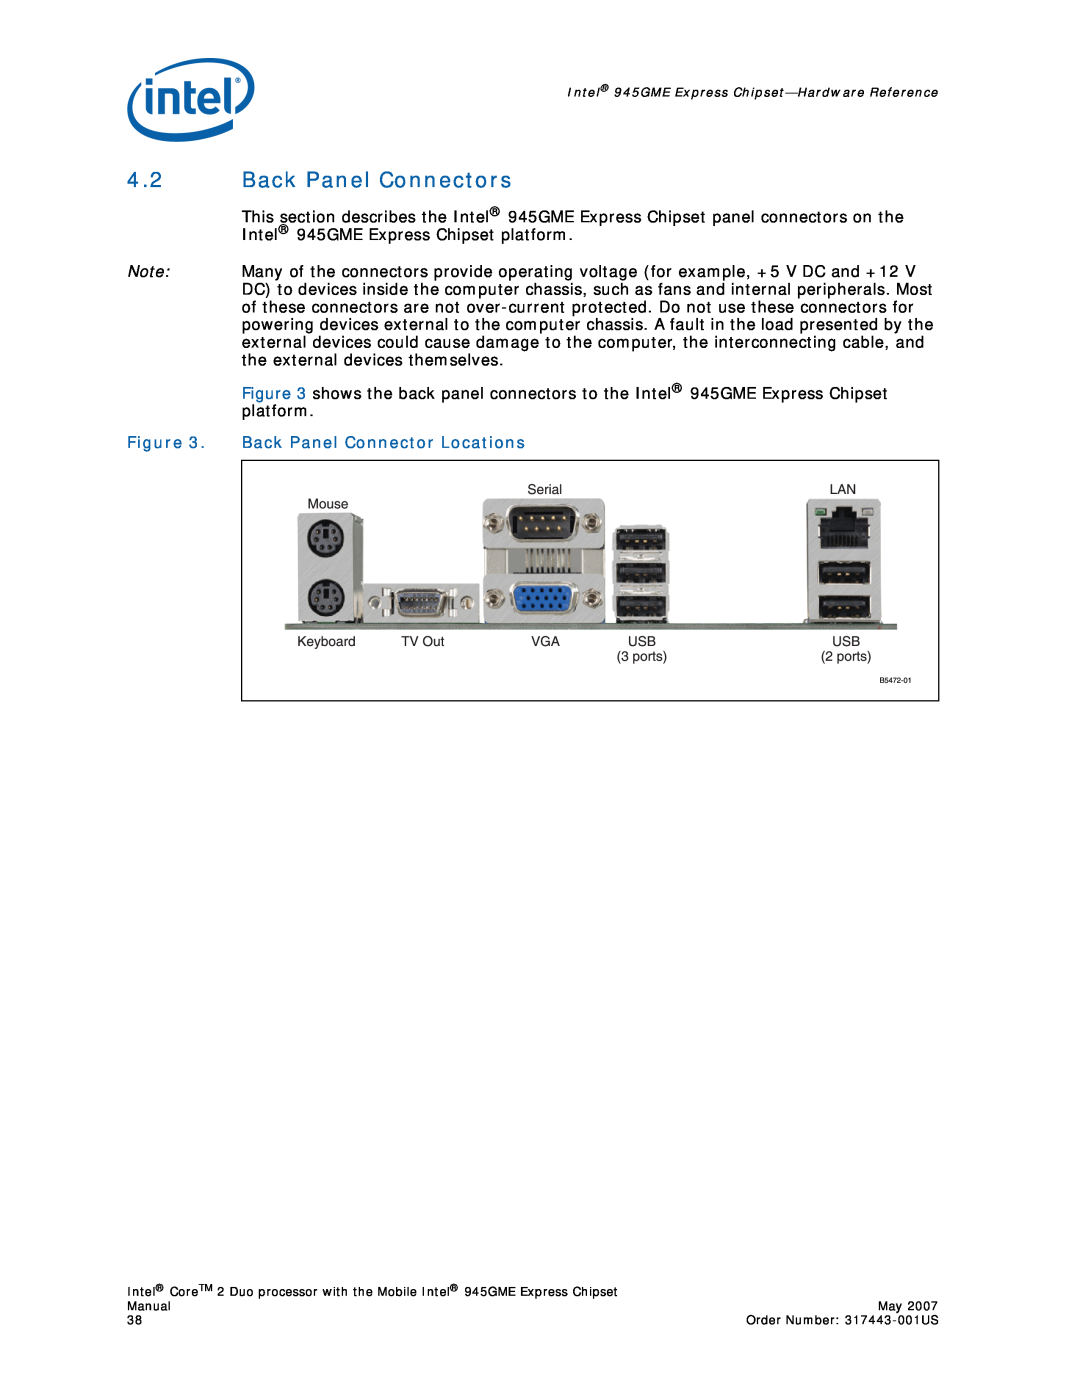 Intel 317443-001US user manual Back Panel Connectors 